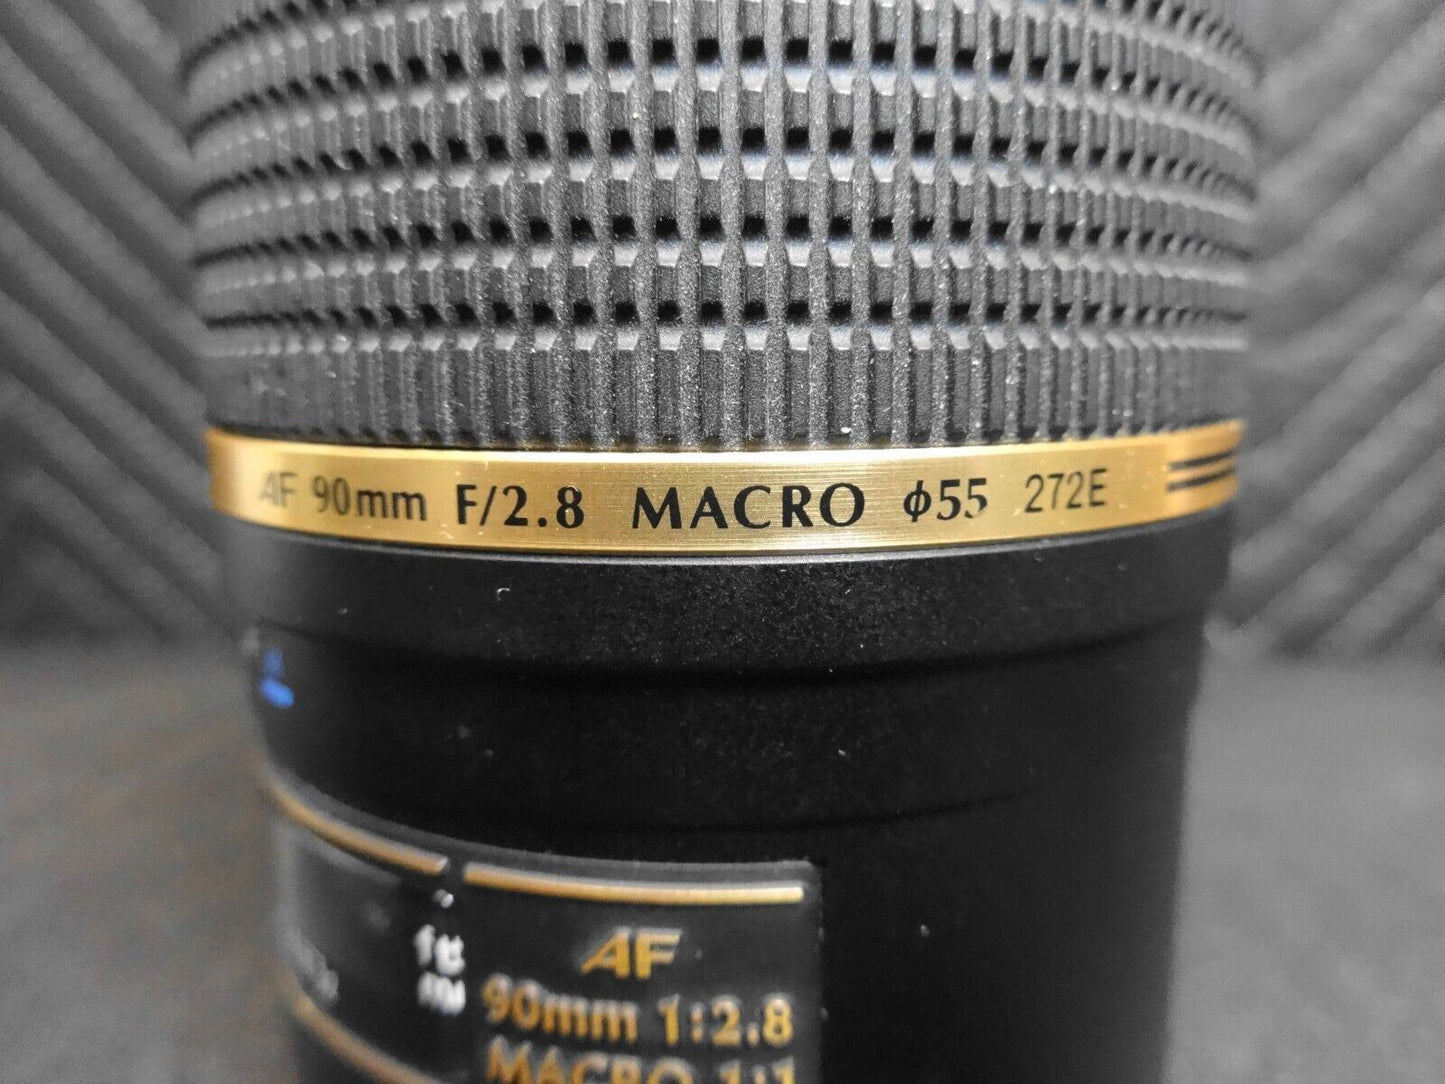 Tamron 90mm f/2.8 SP Di 1:1 Macro Prime AF Lens for Nikon F Mount 272e